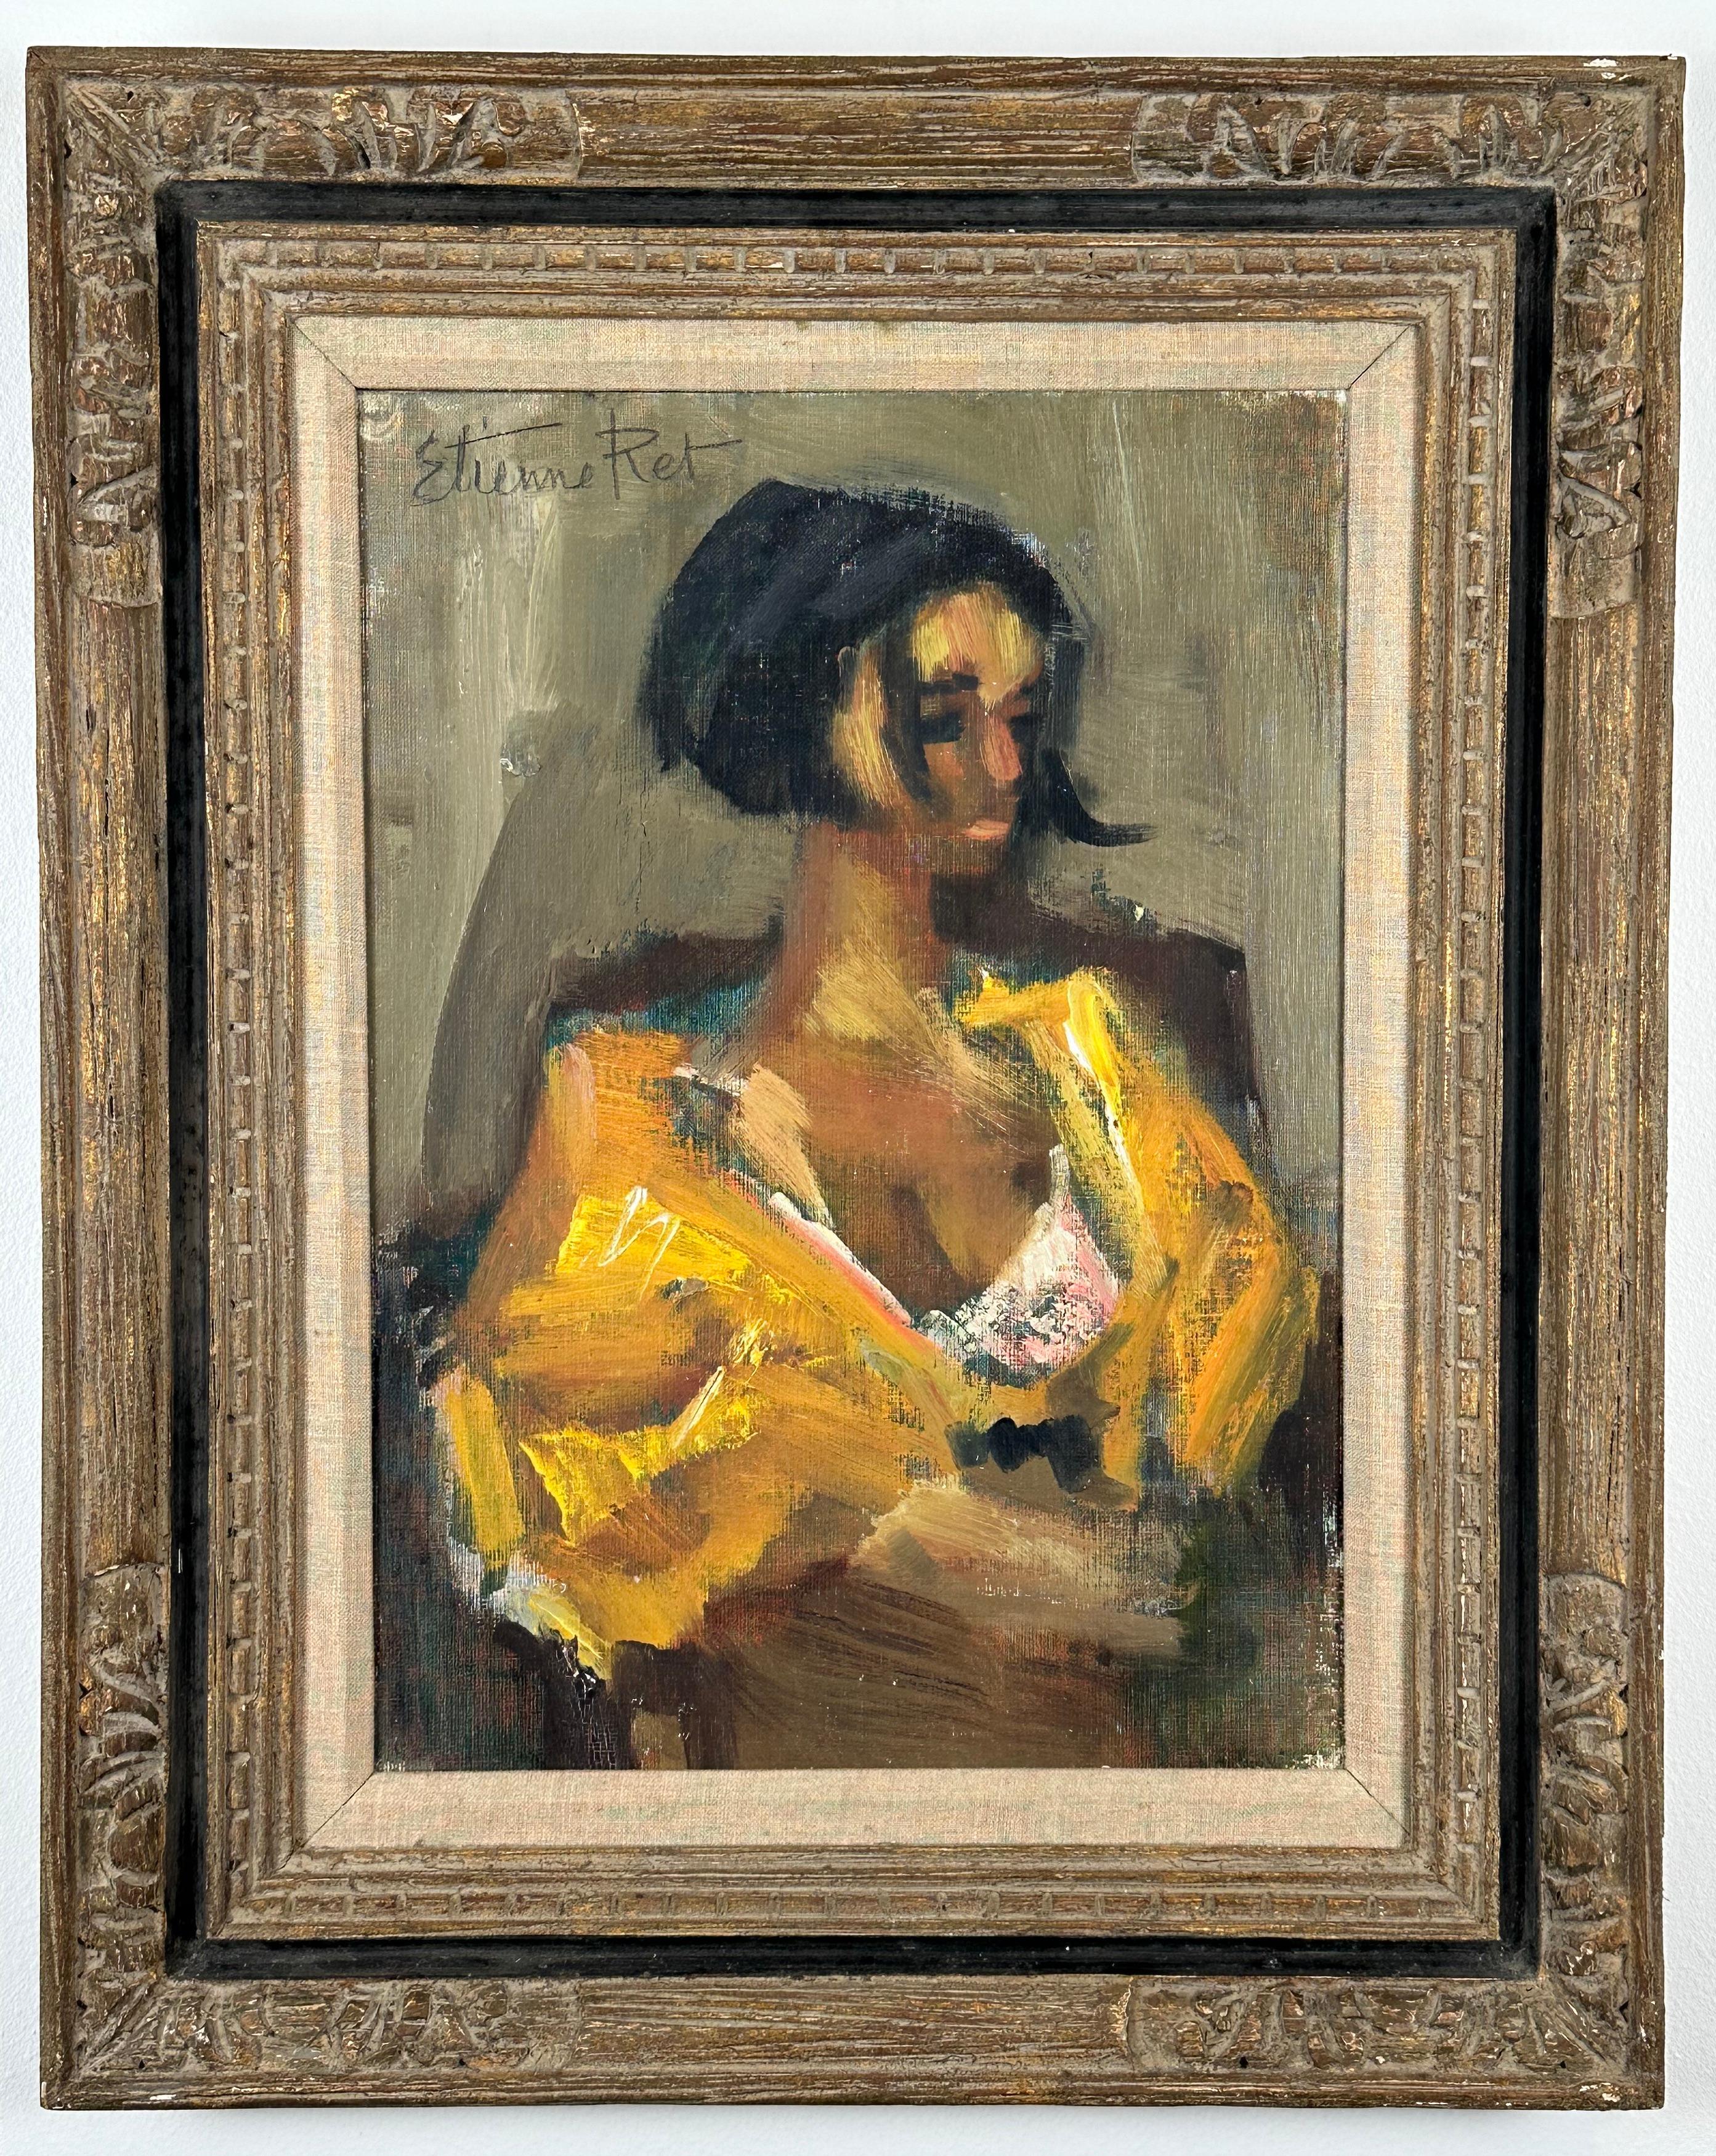 Etienne Ret Figurative Painting - Portrait of a Young Woman